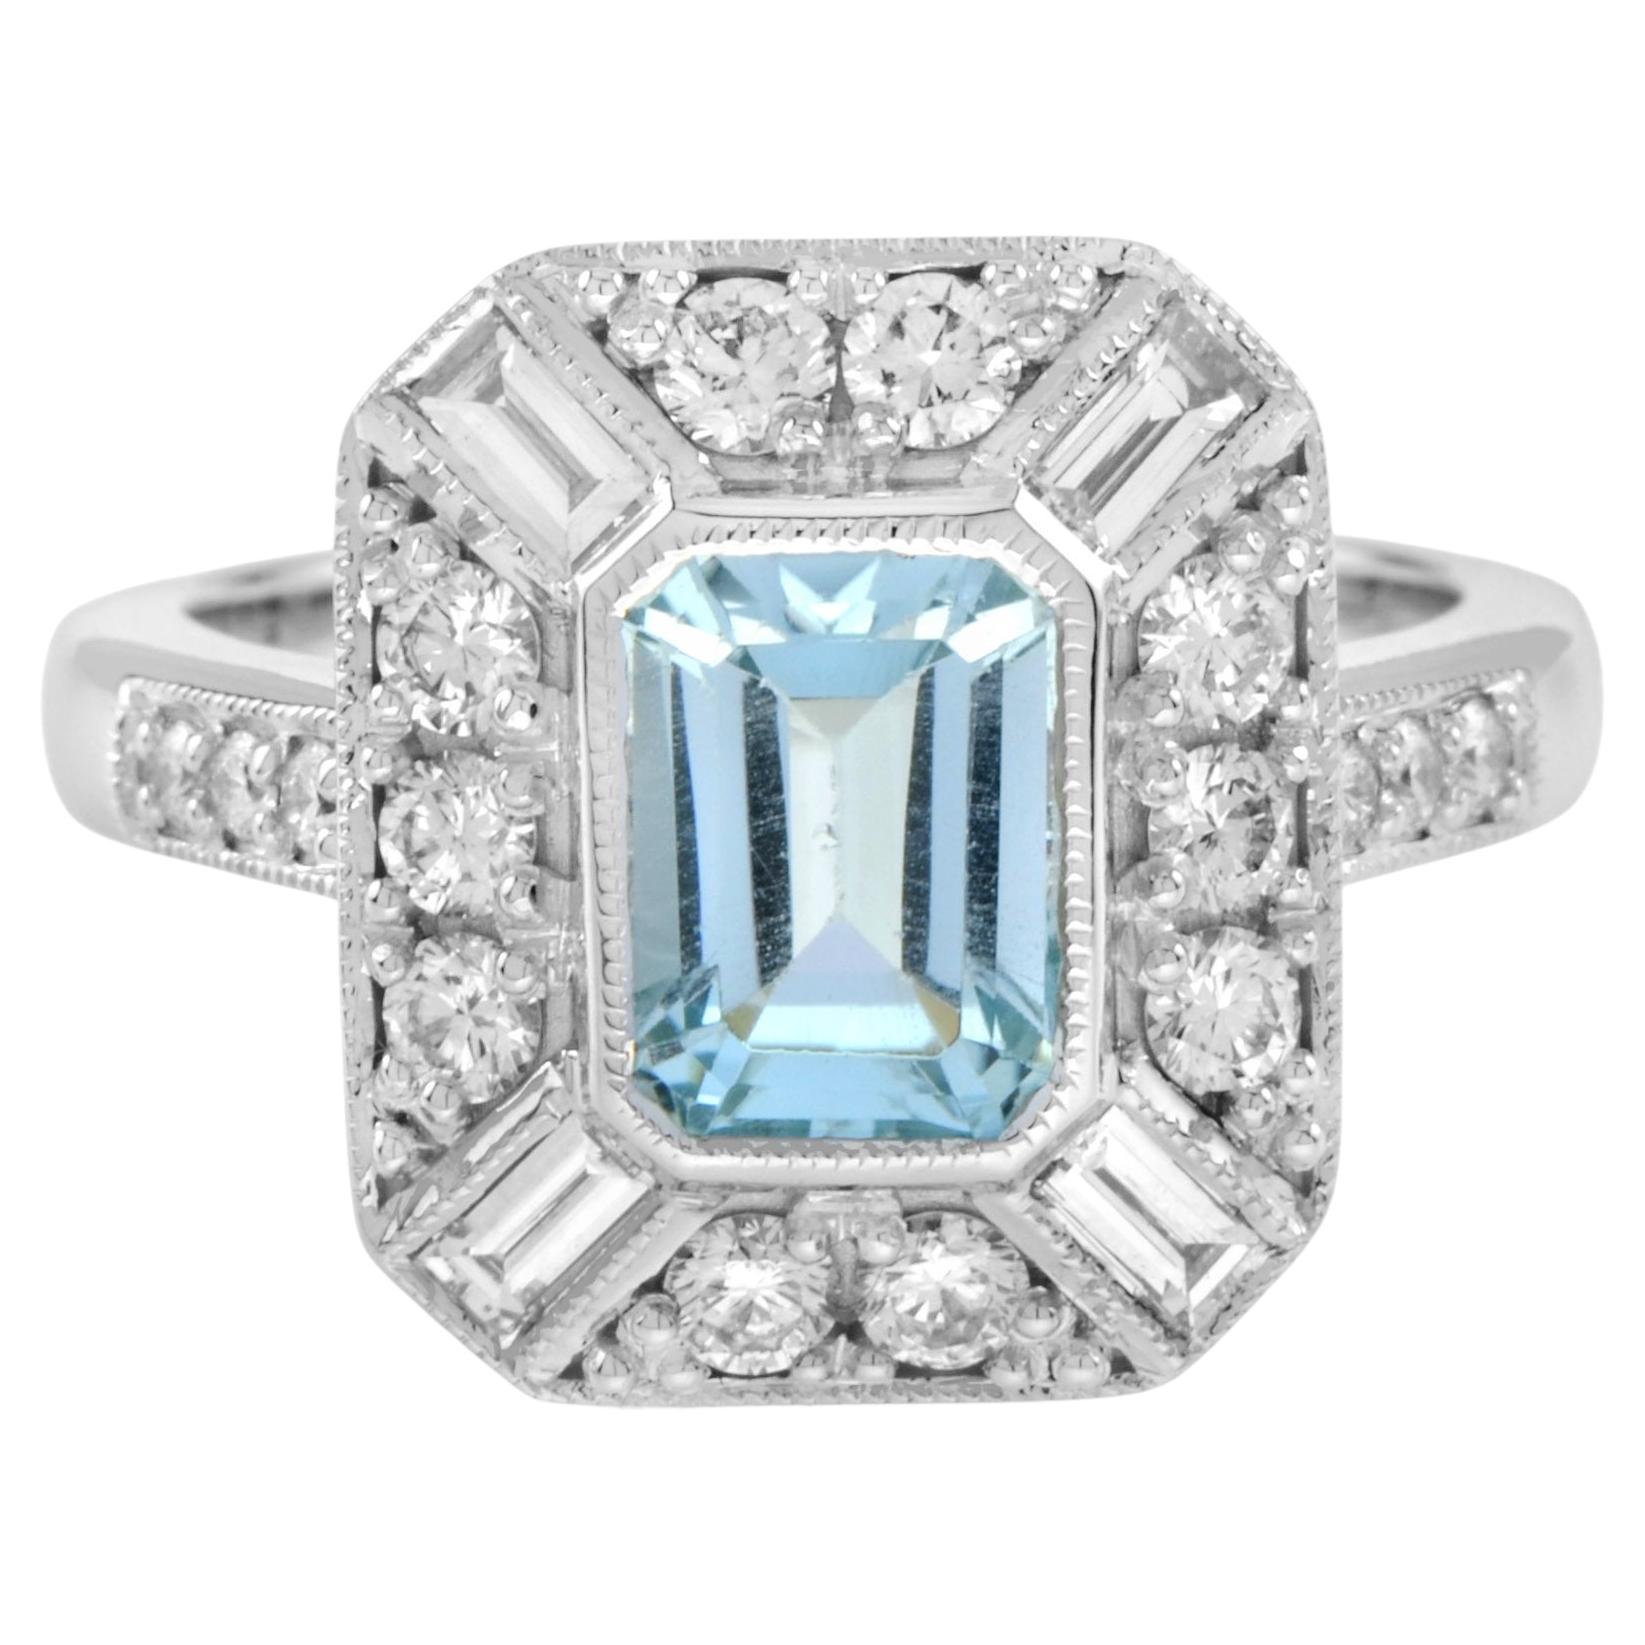 Aquamarine and Diamond Halo Art Deco Style Engagement Ring in 18k White Gold